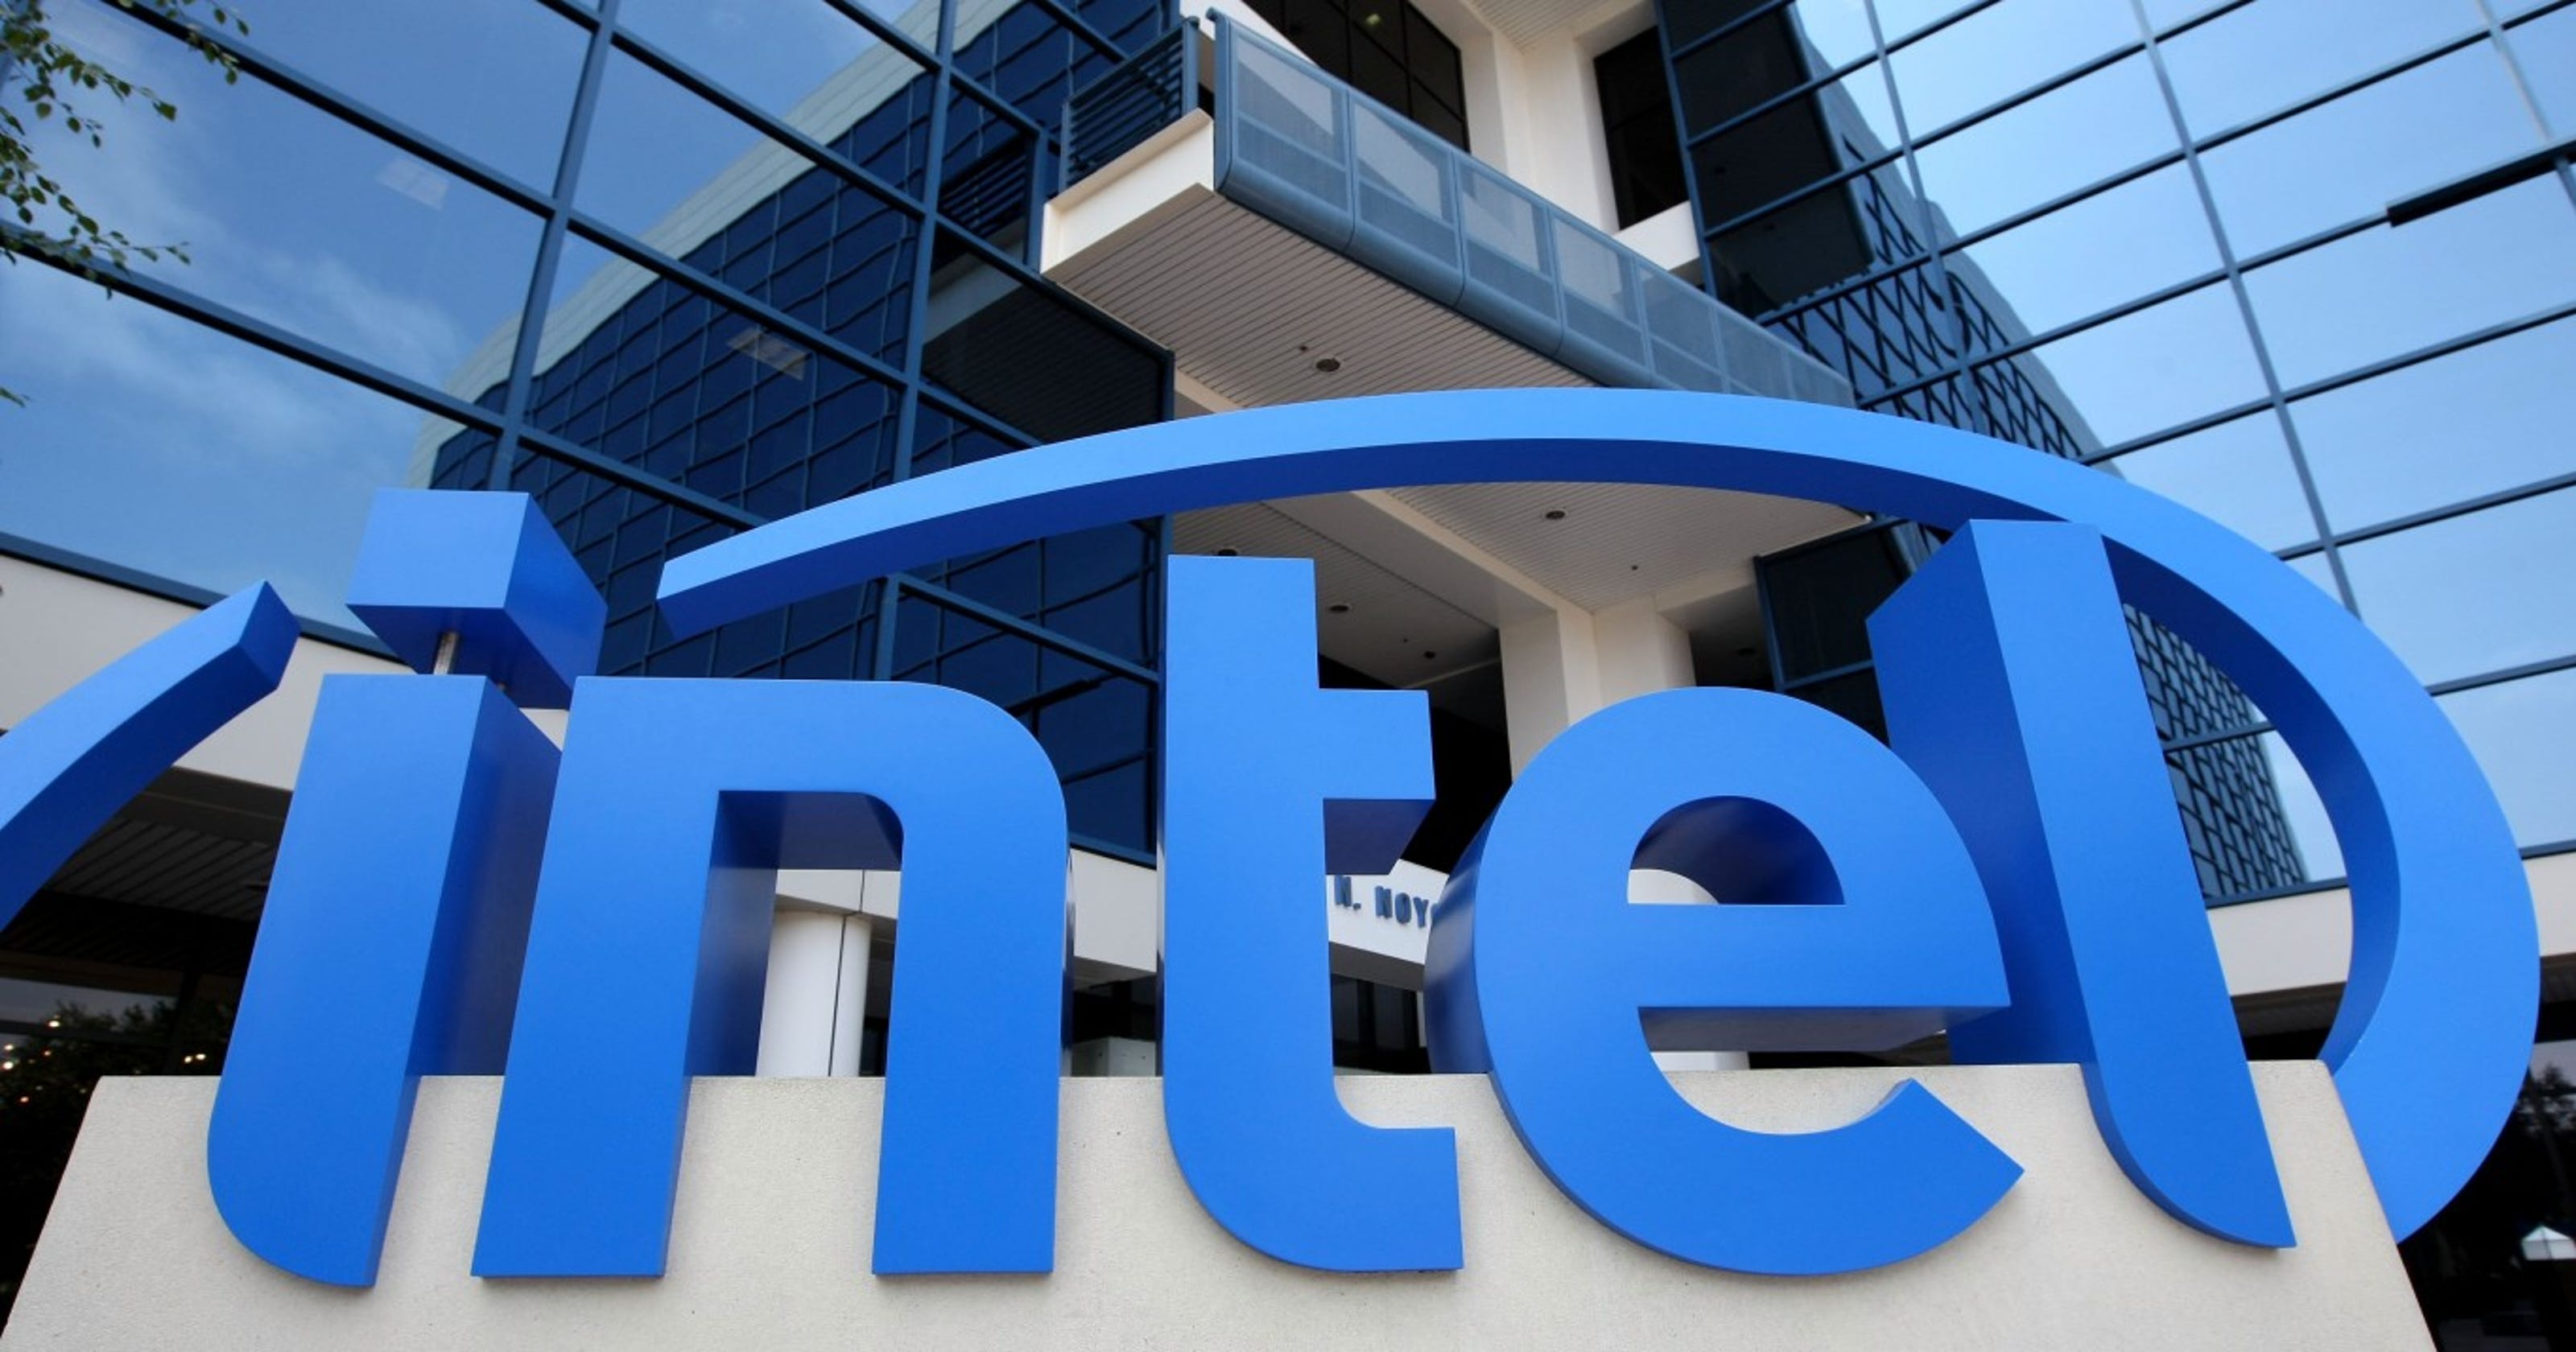 Layoffs hit Oregon Intel locations